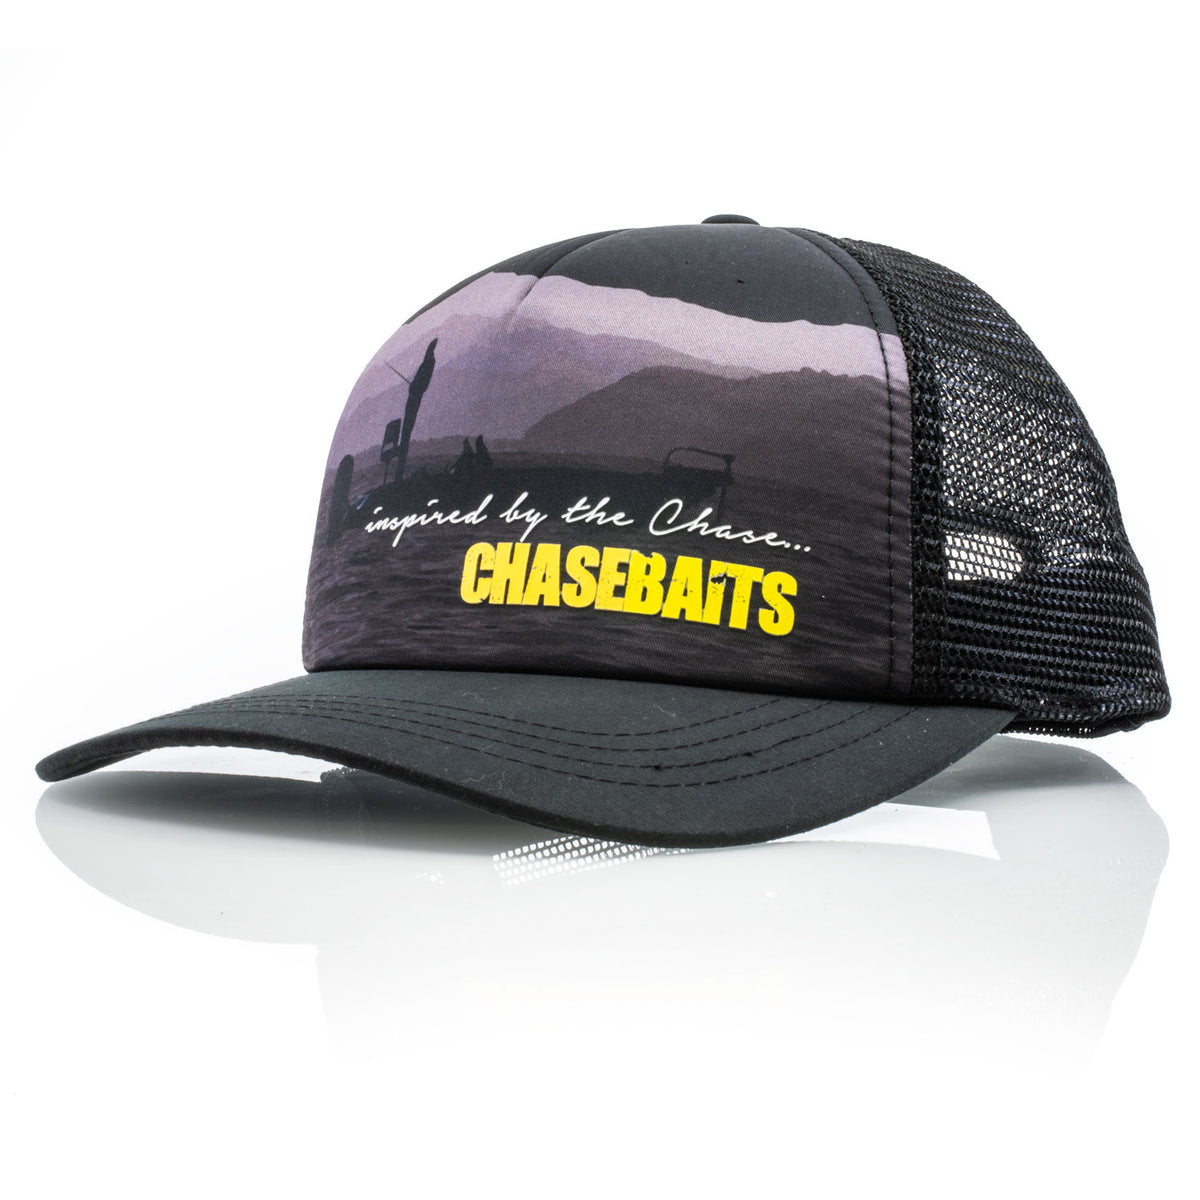 FREE Chasebaits Hat